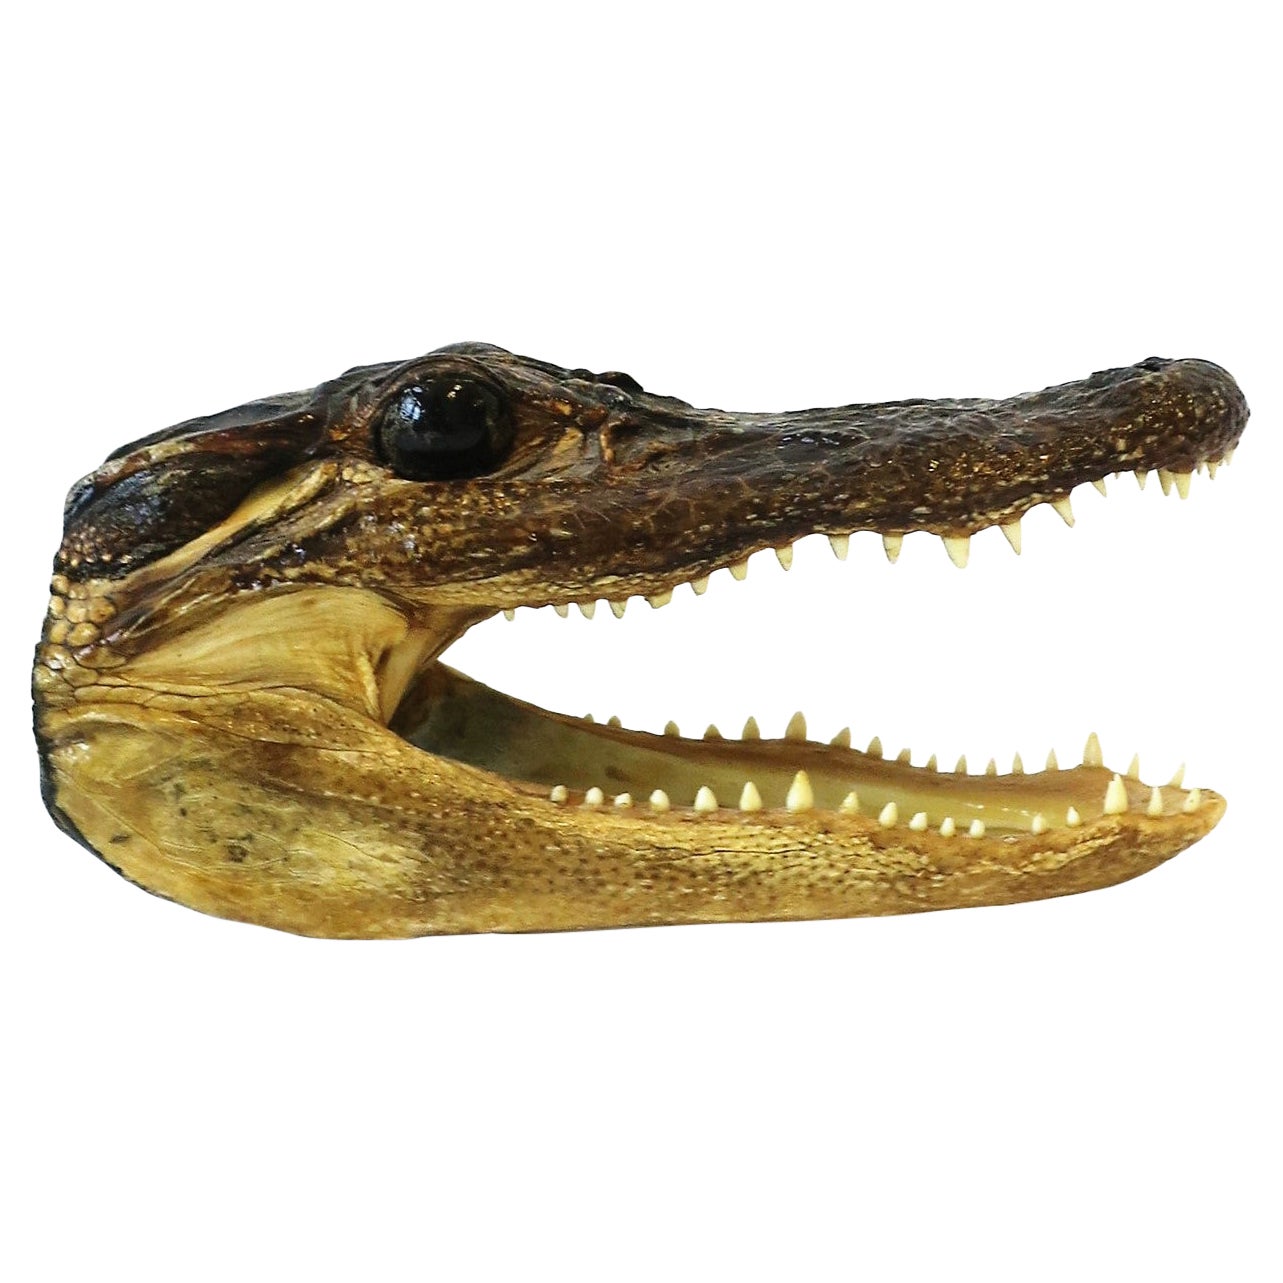 Taxidermy Alligator Reptile Decorative Object Sculpture